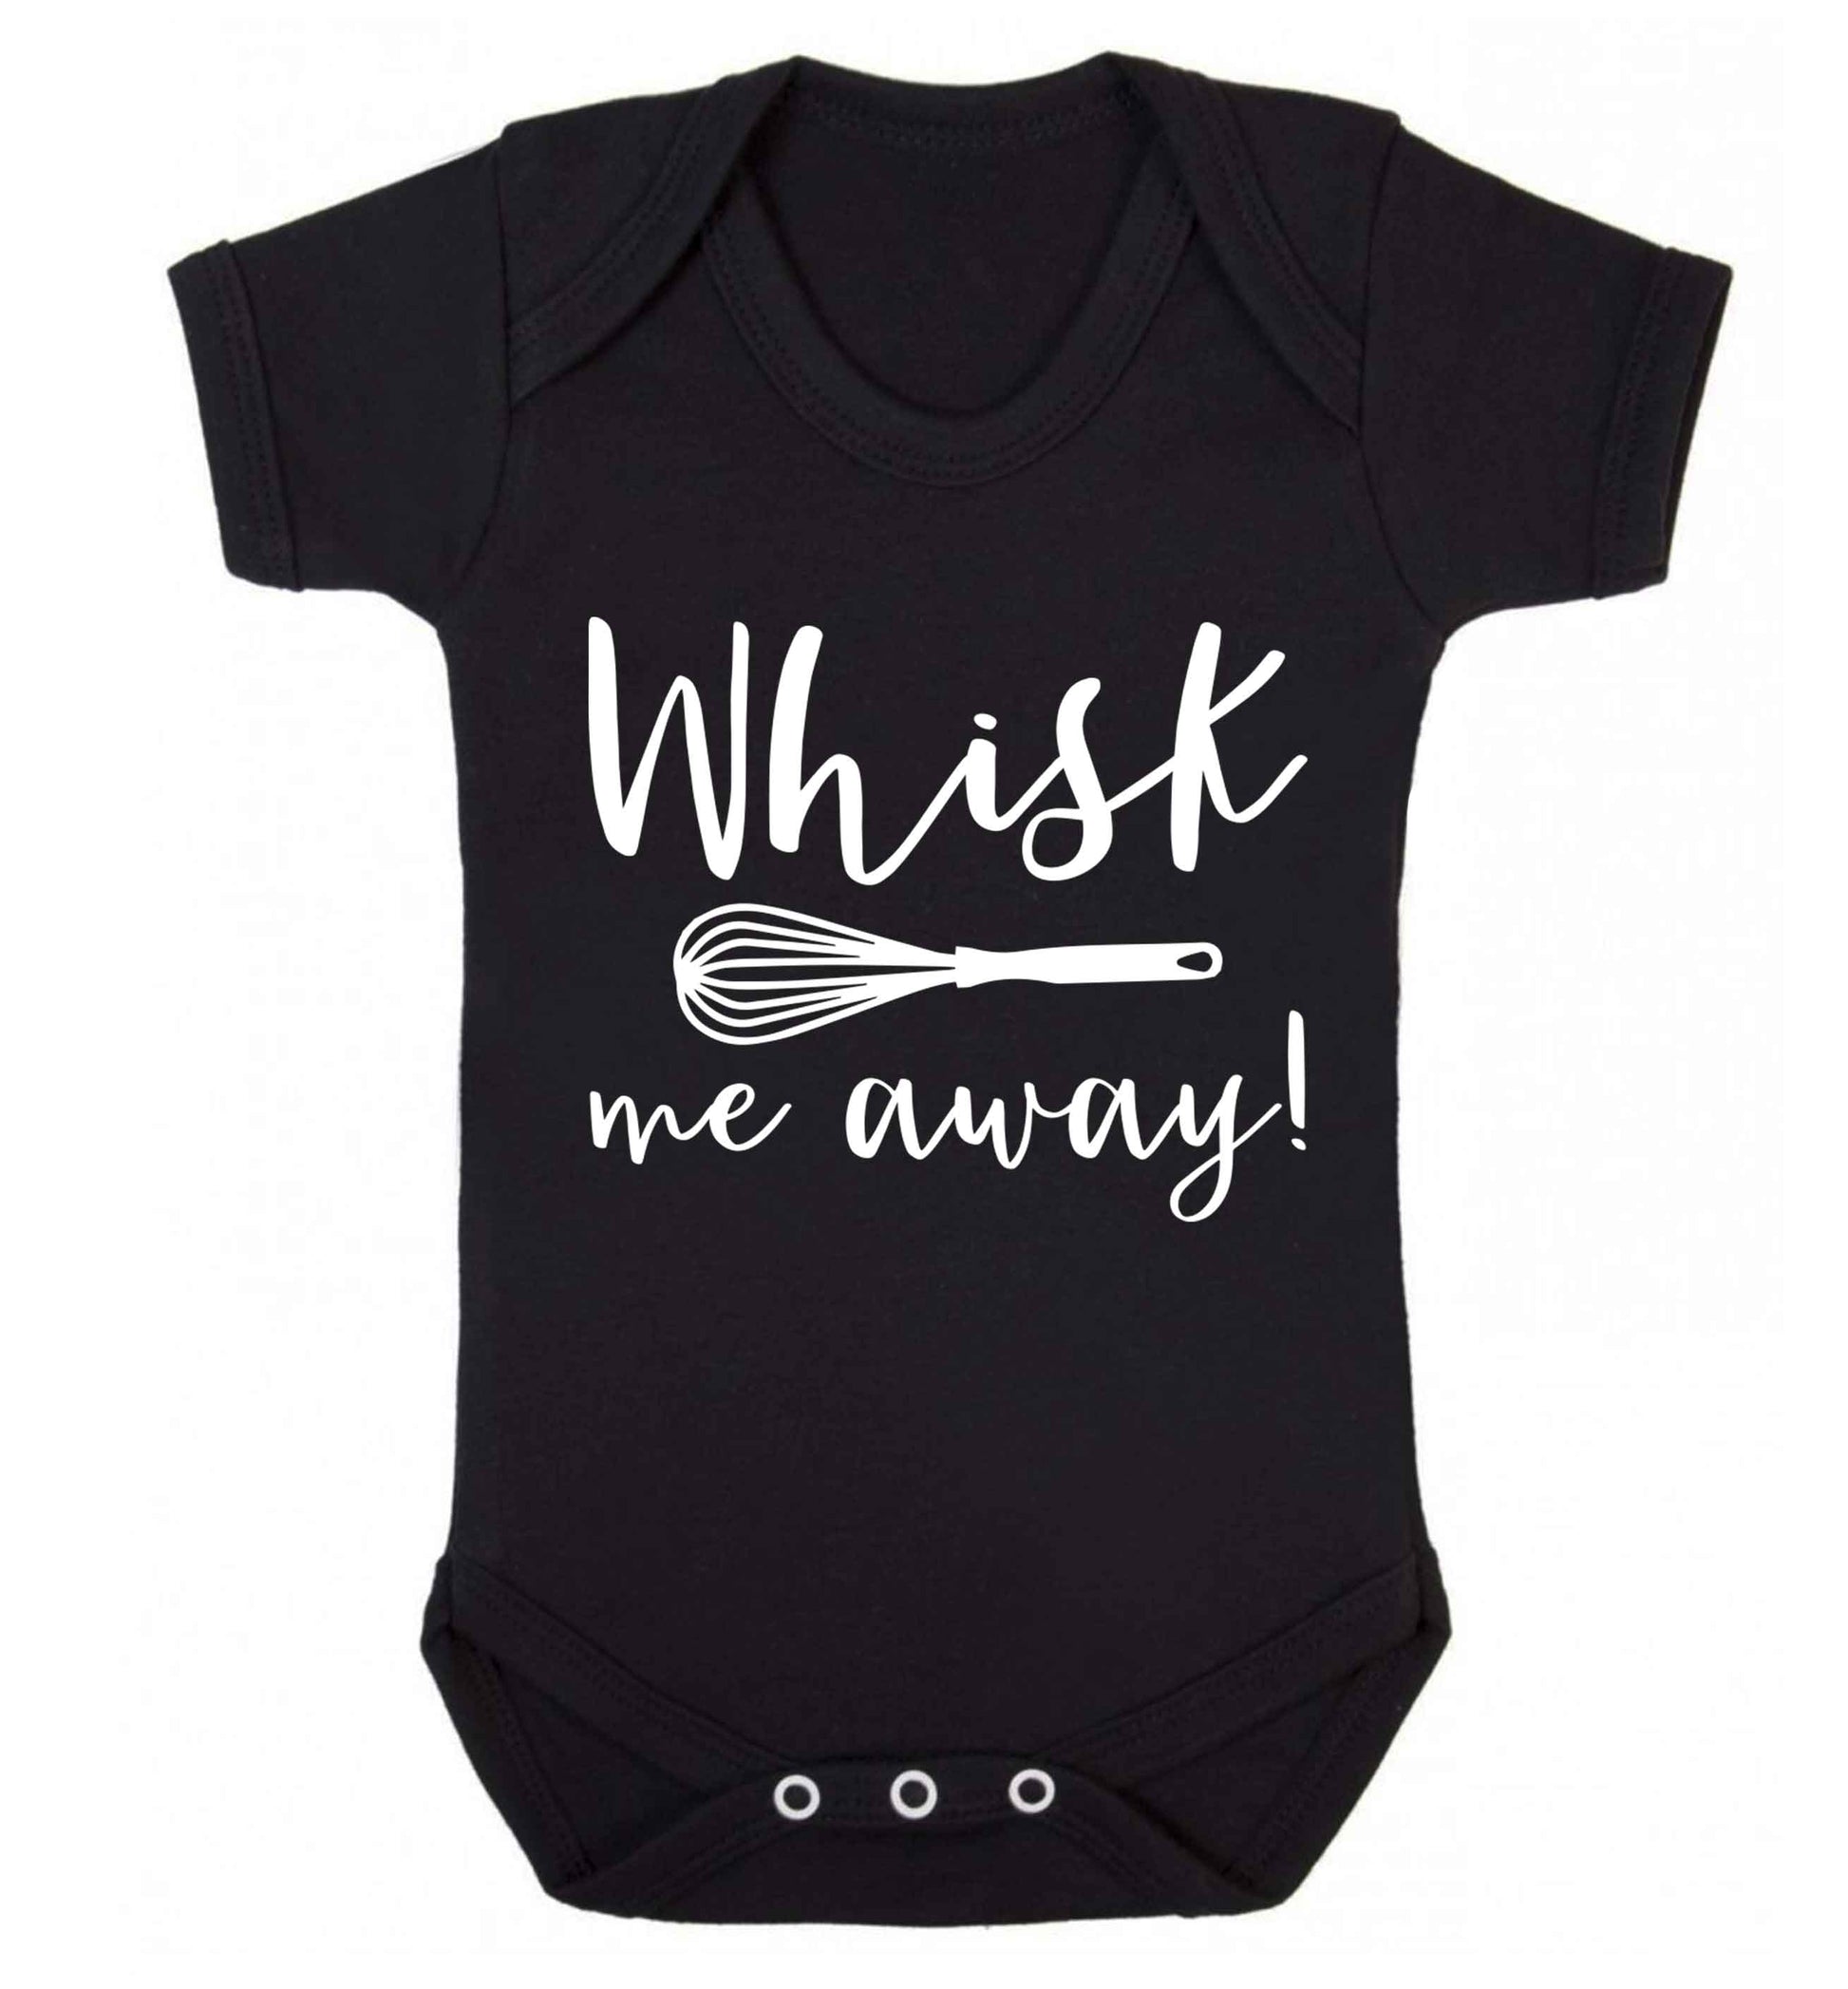 Whisk me away Baby Vest black 18-24 months